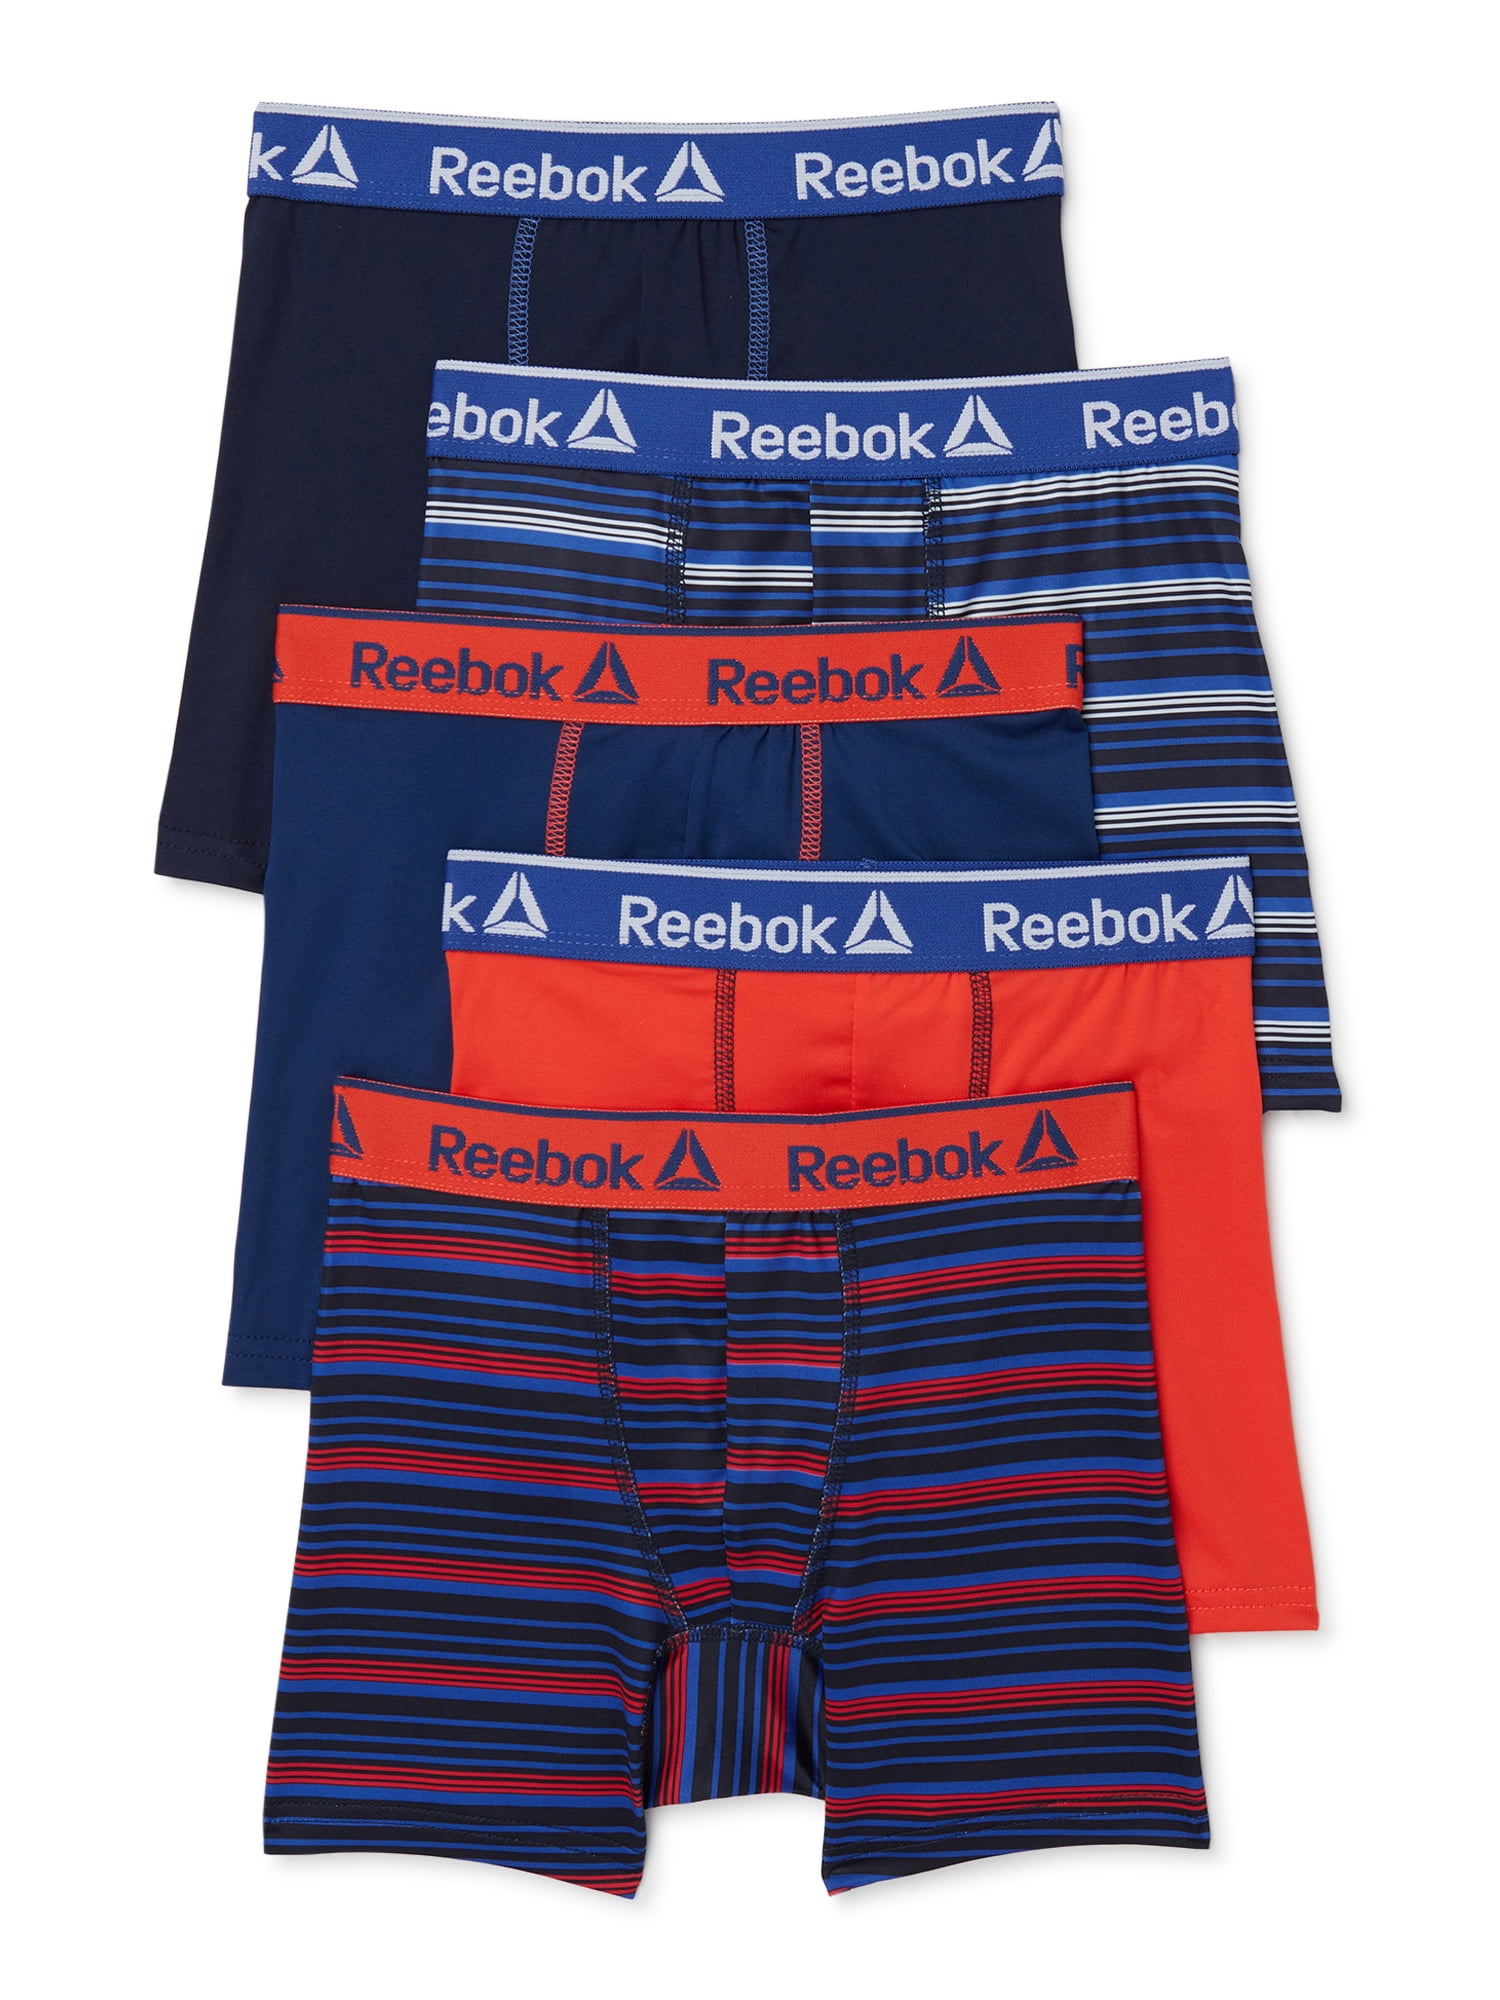 Reebok Men's Underwear - Performance Boxer Briefs (8 Pack) : :  Clothing, Shoes & Accessories